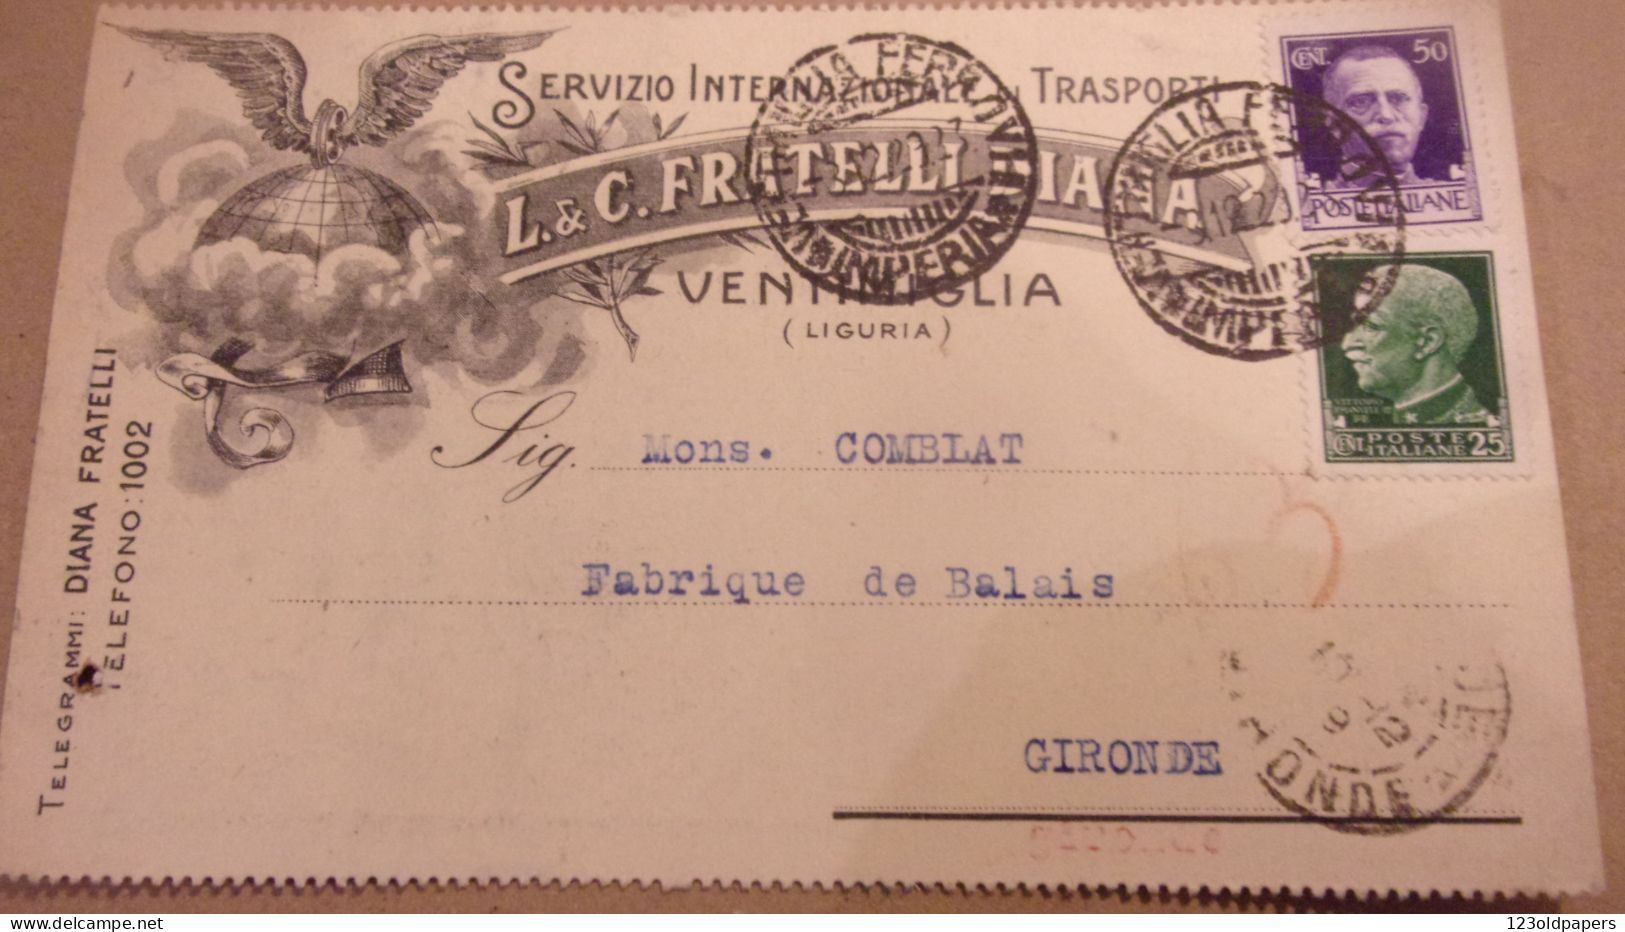 VENTIMIGLIA - IMPERIA - CARTOLINA COMMERCIALE "L.& C. FRATELLI DIANA" TRASPORTI INTERNAZIONALI - 1929 - Poststempel